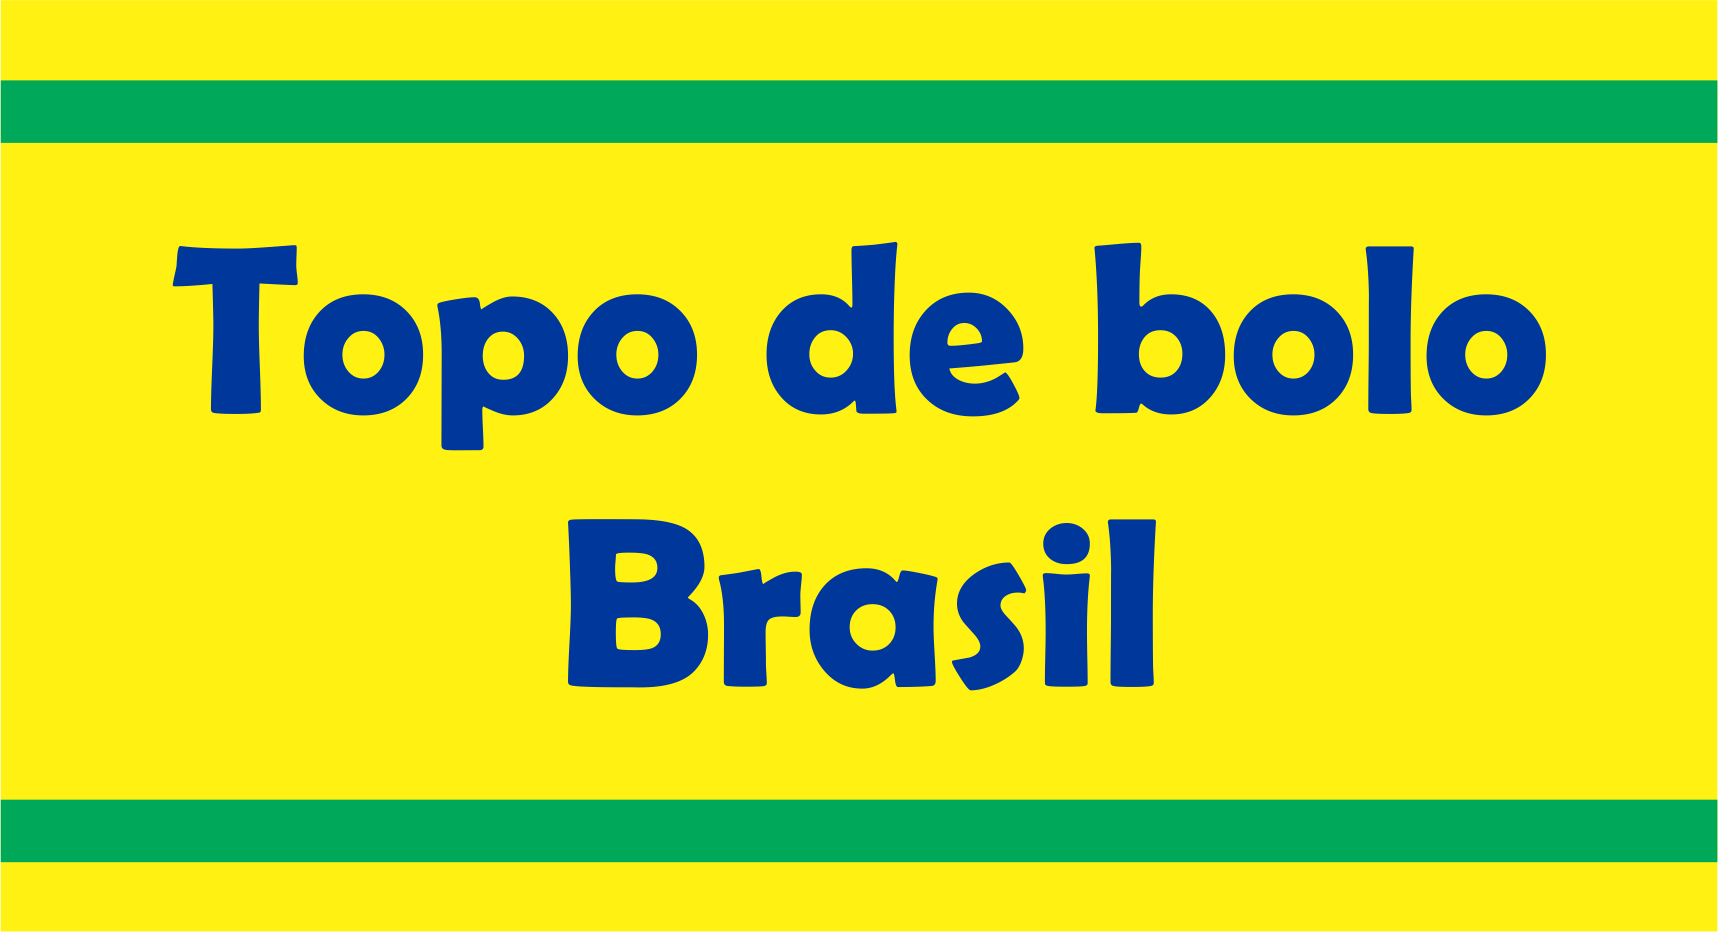 Topo de bolo Brasil gratuito, pronto para imprimir